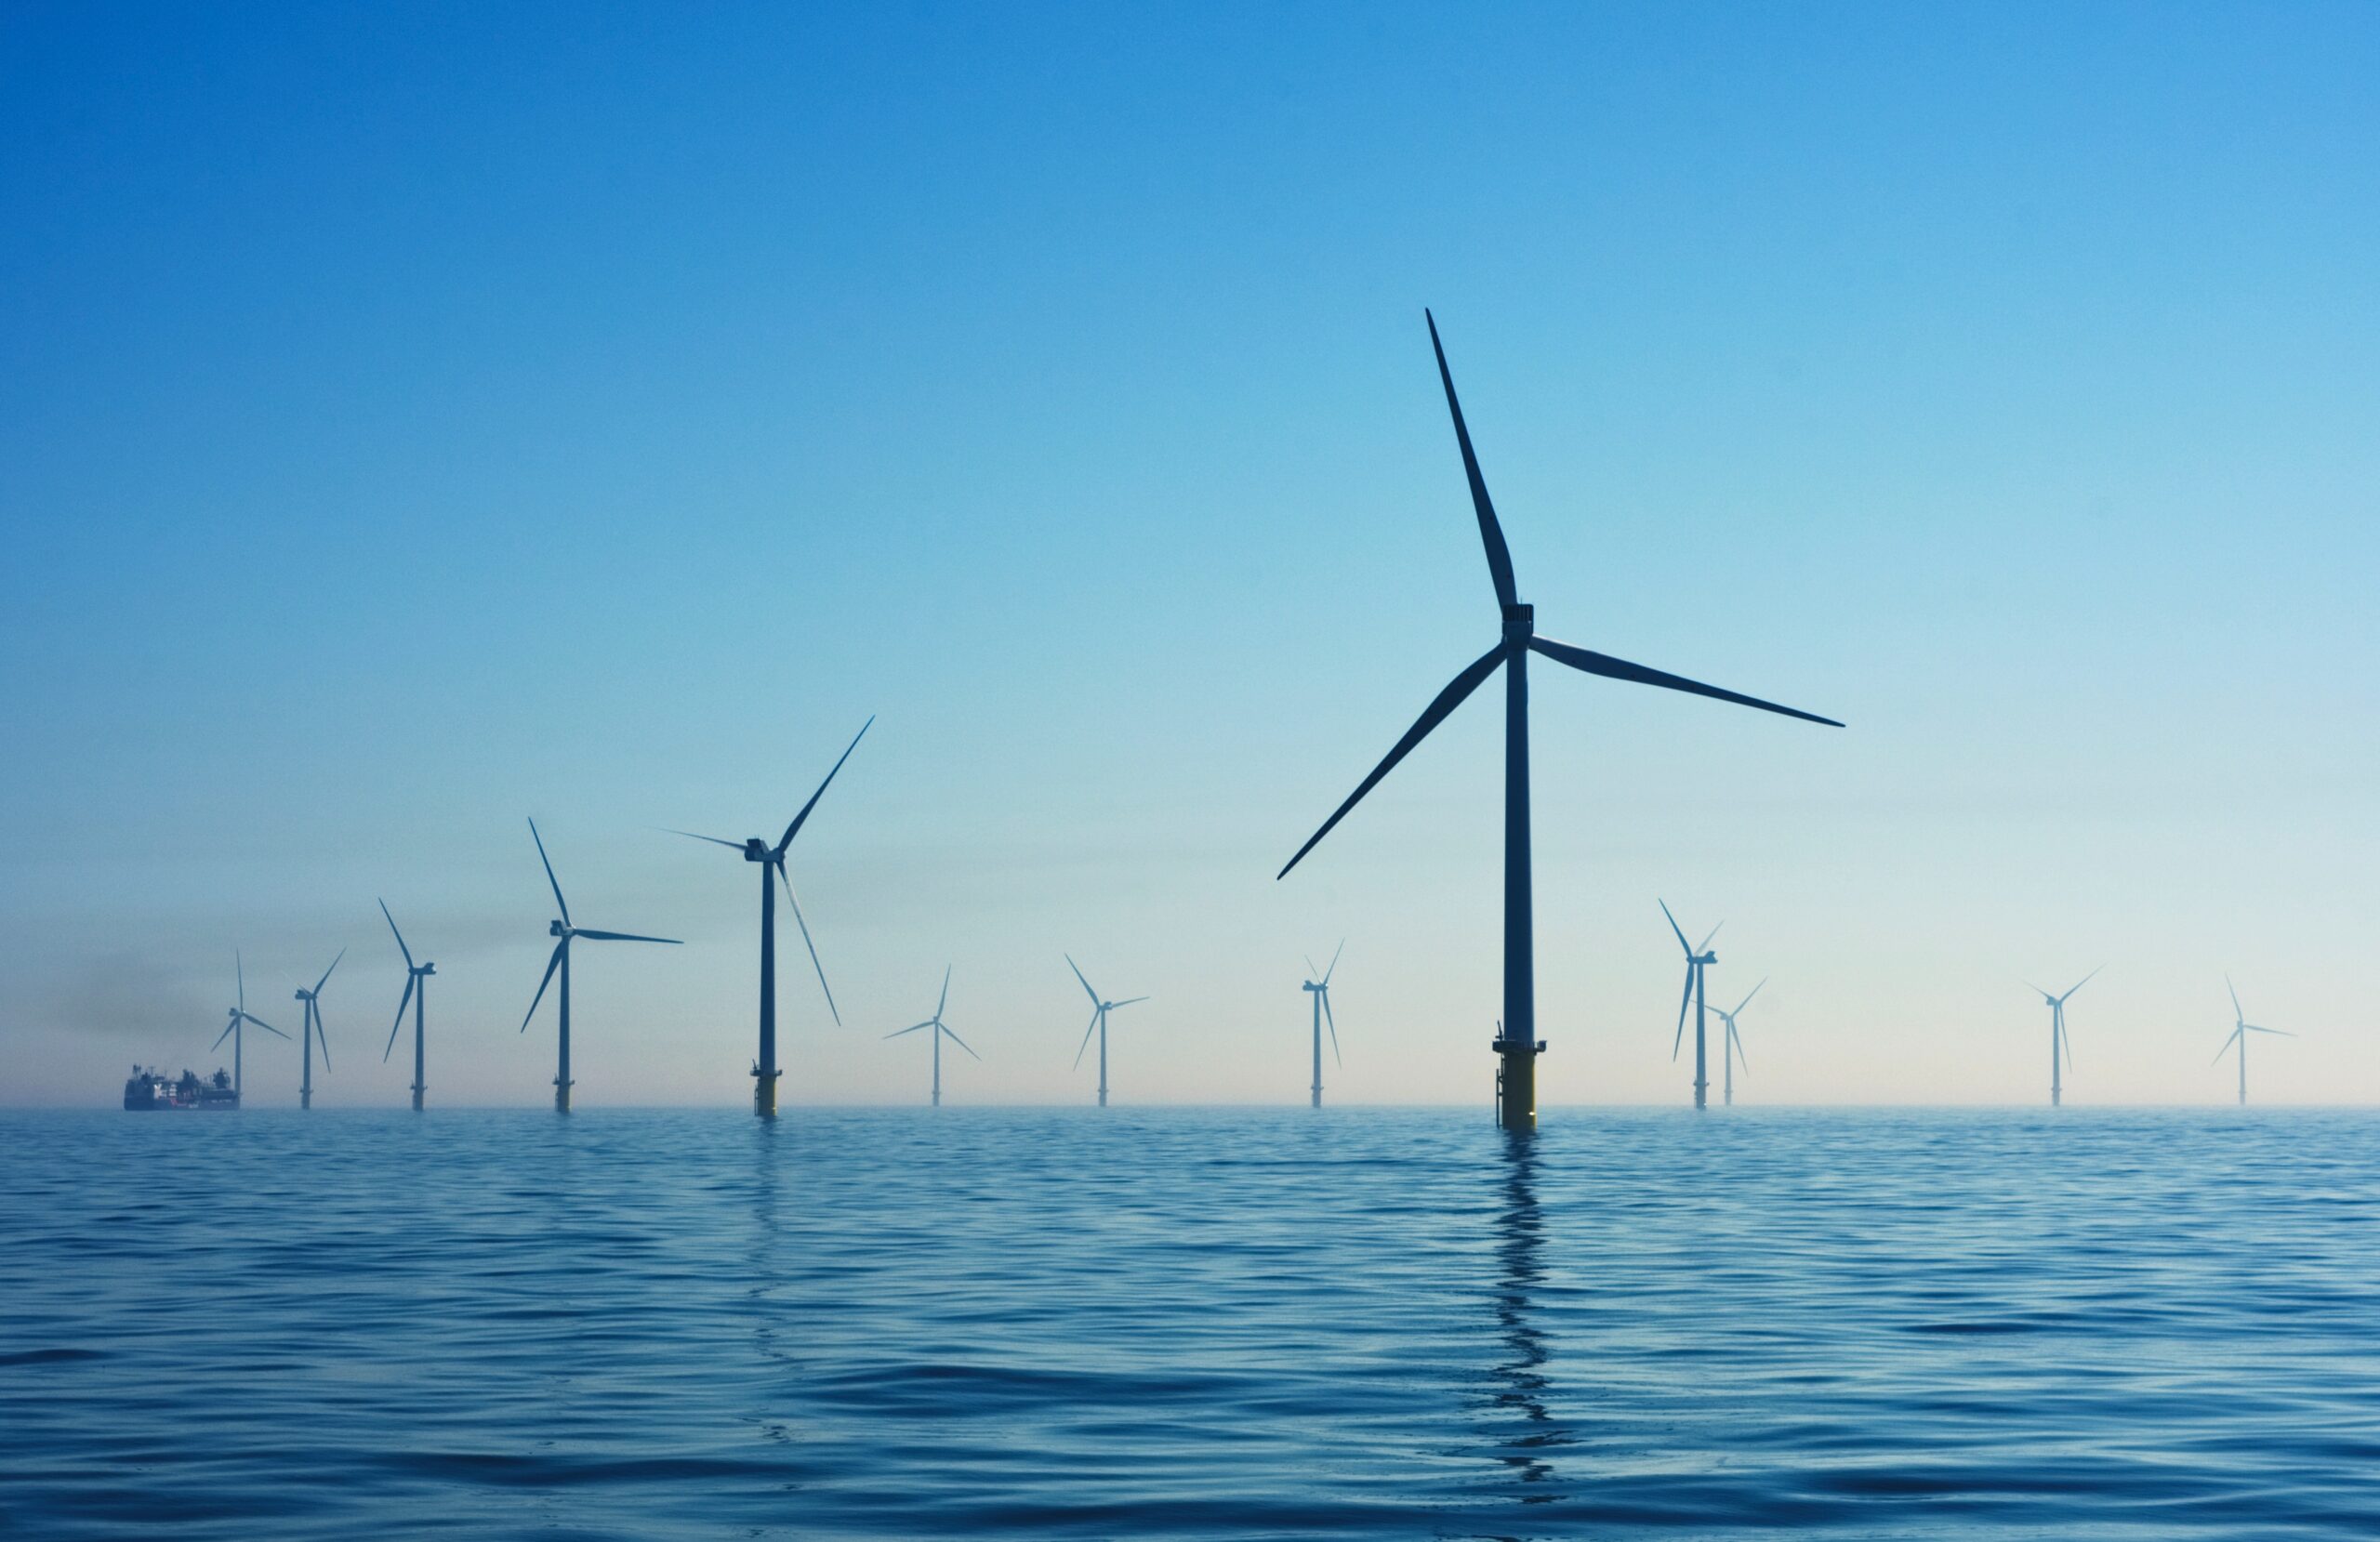 Active offshore wind park developer UK